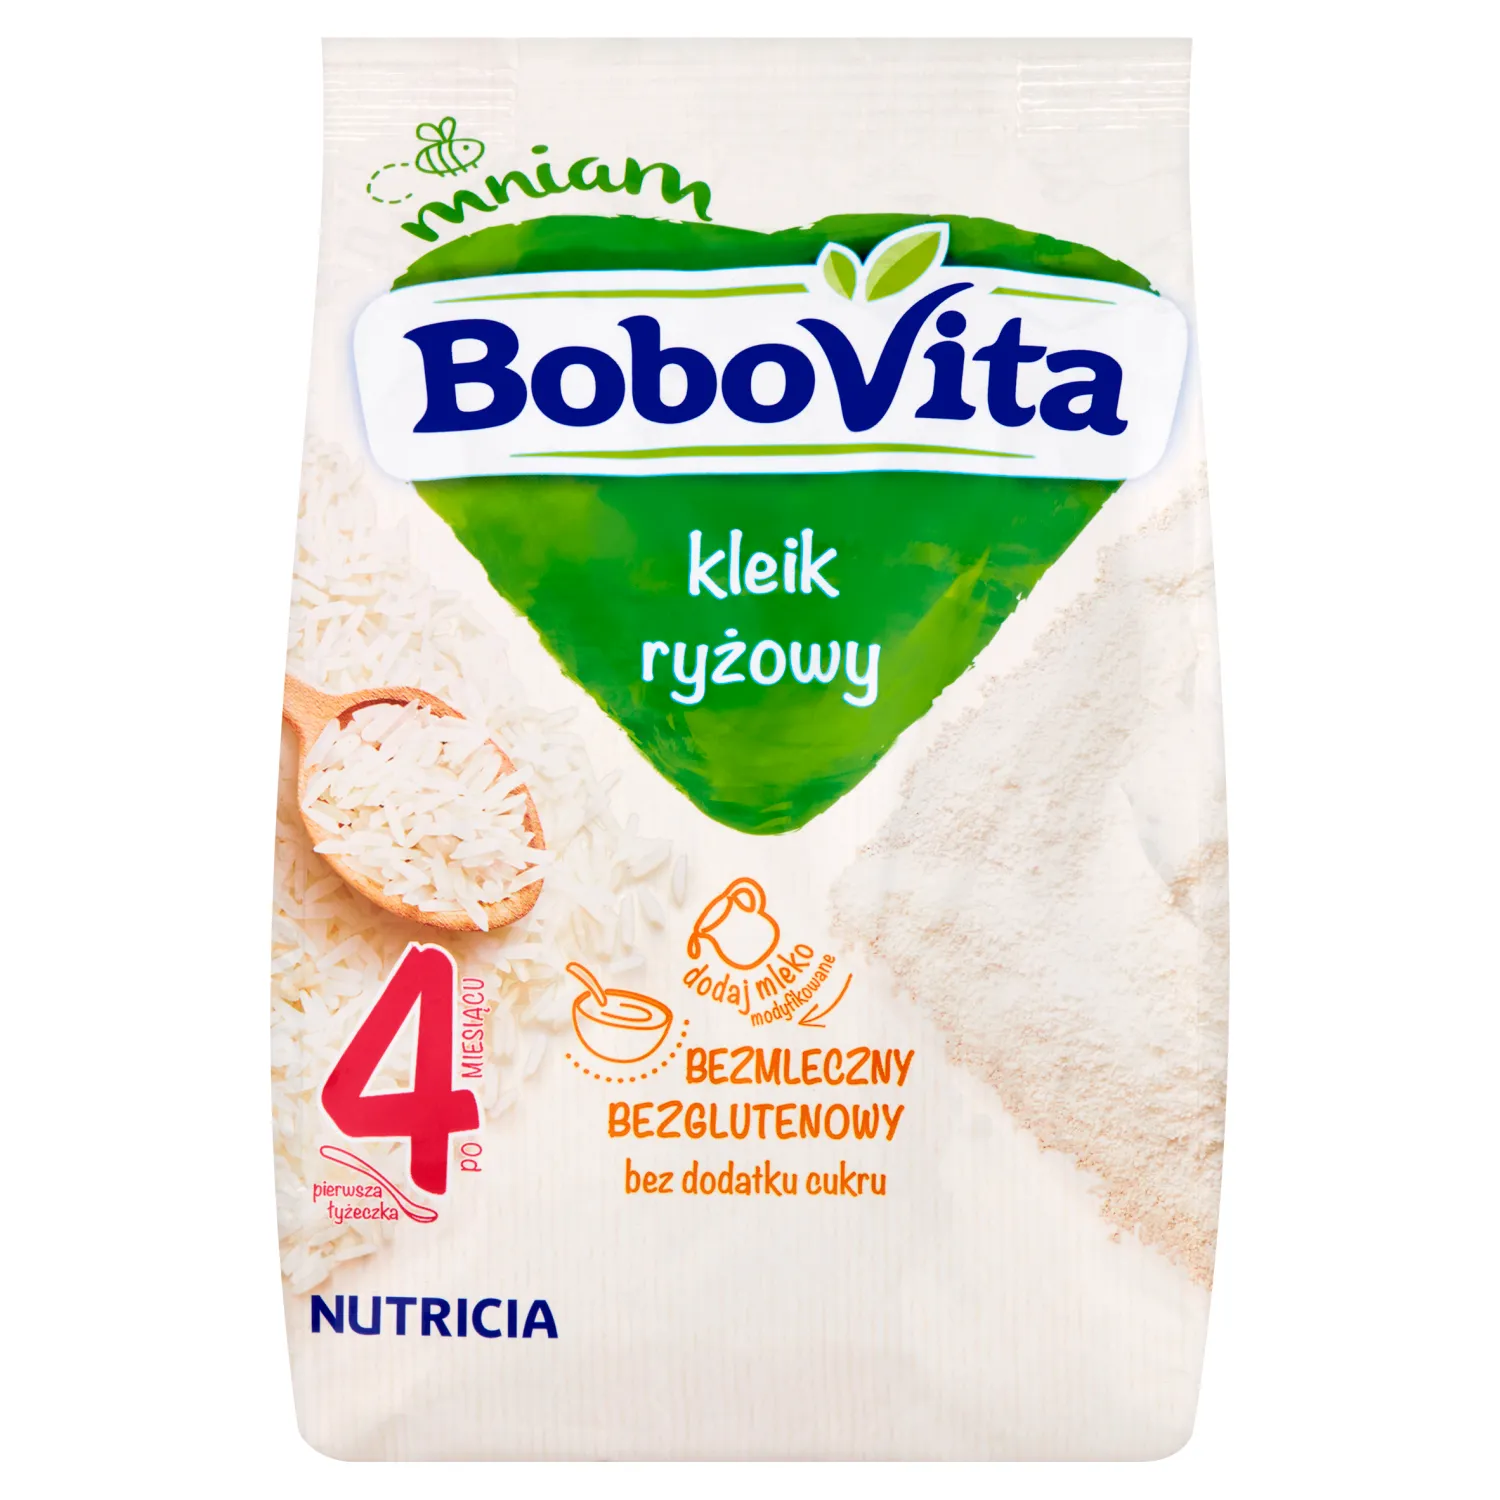 BoboVita kleik ryżowy, 160 g